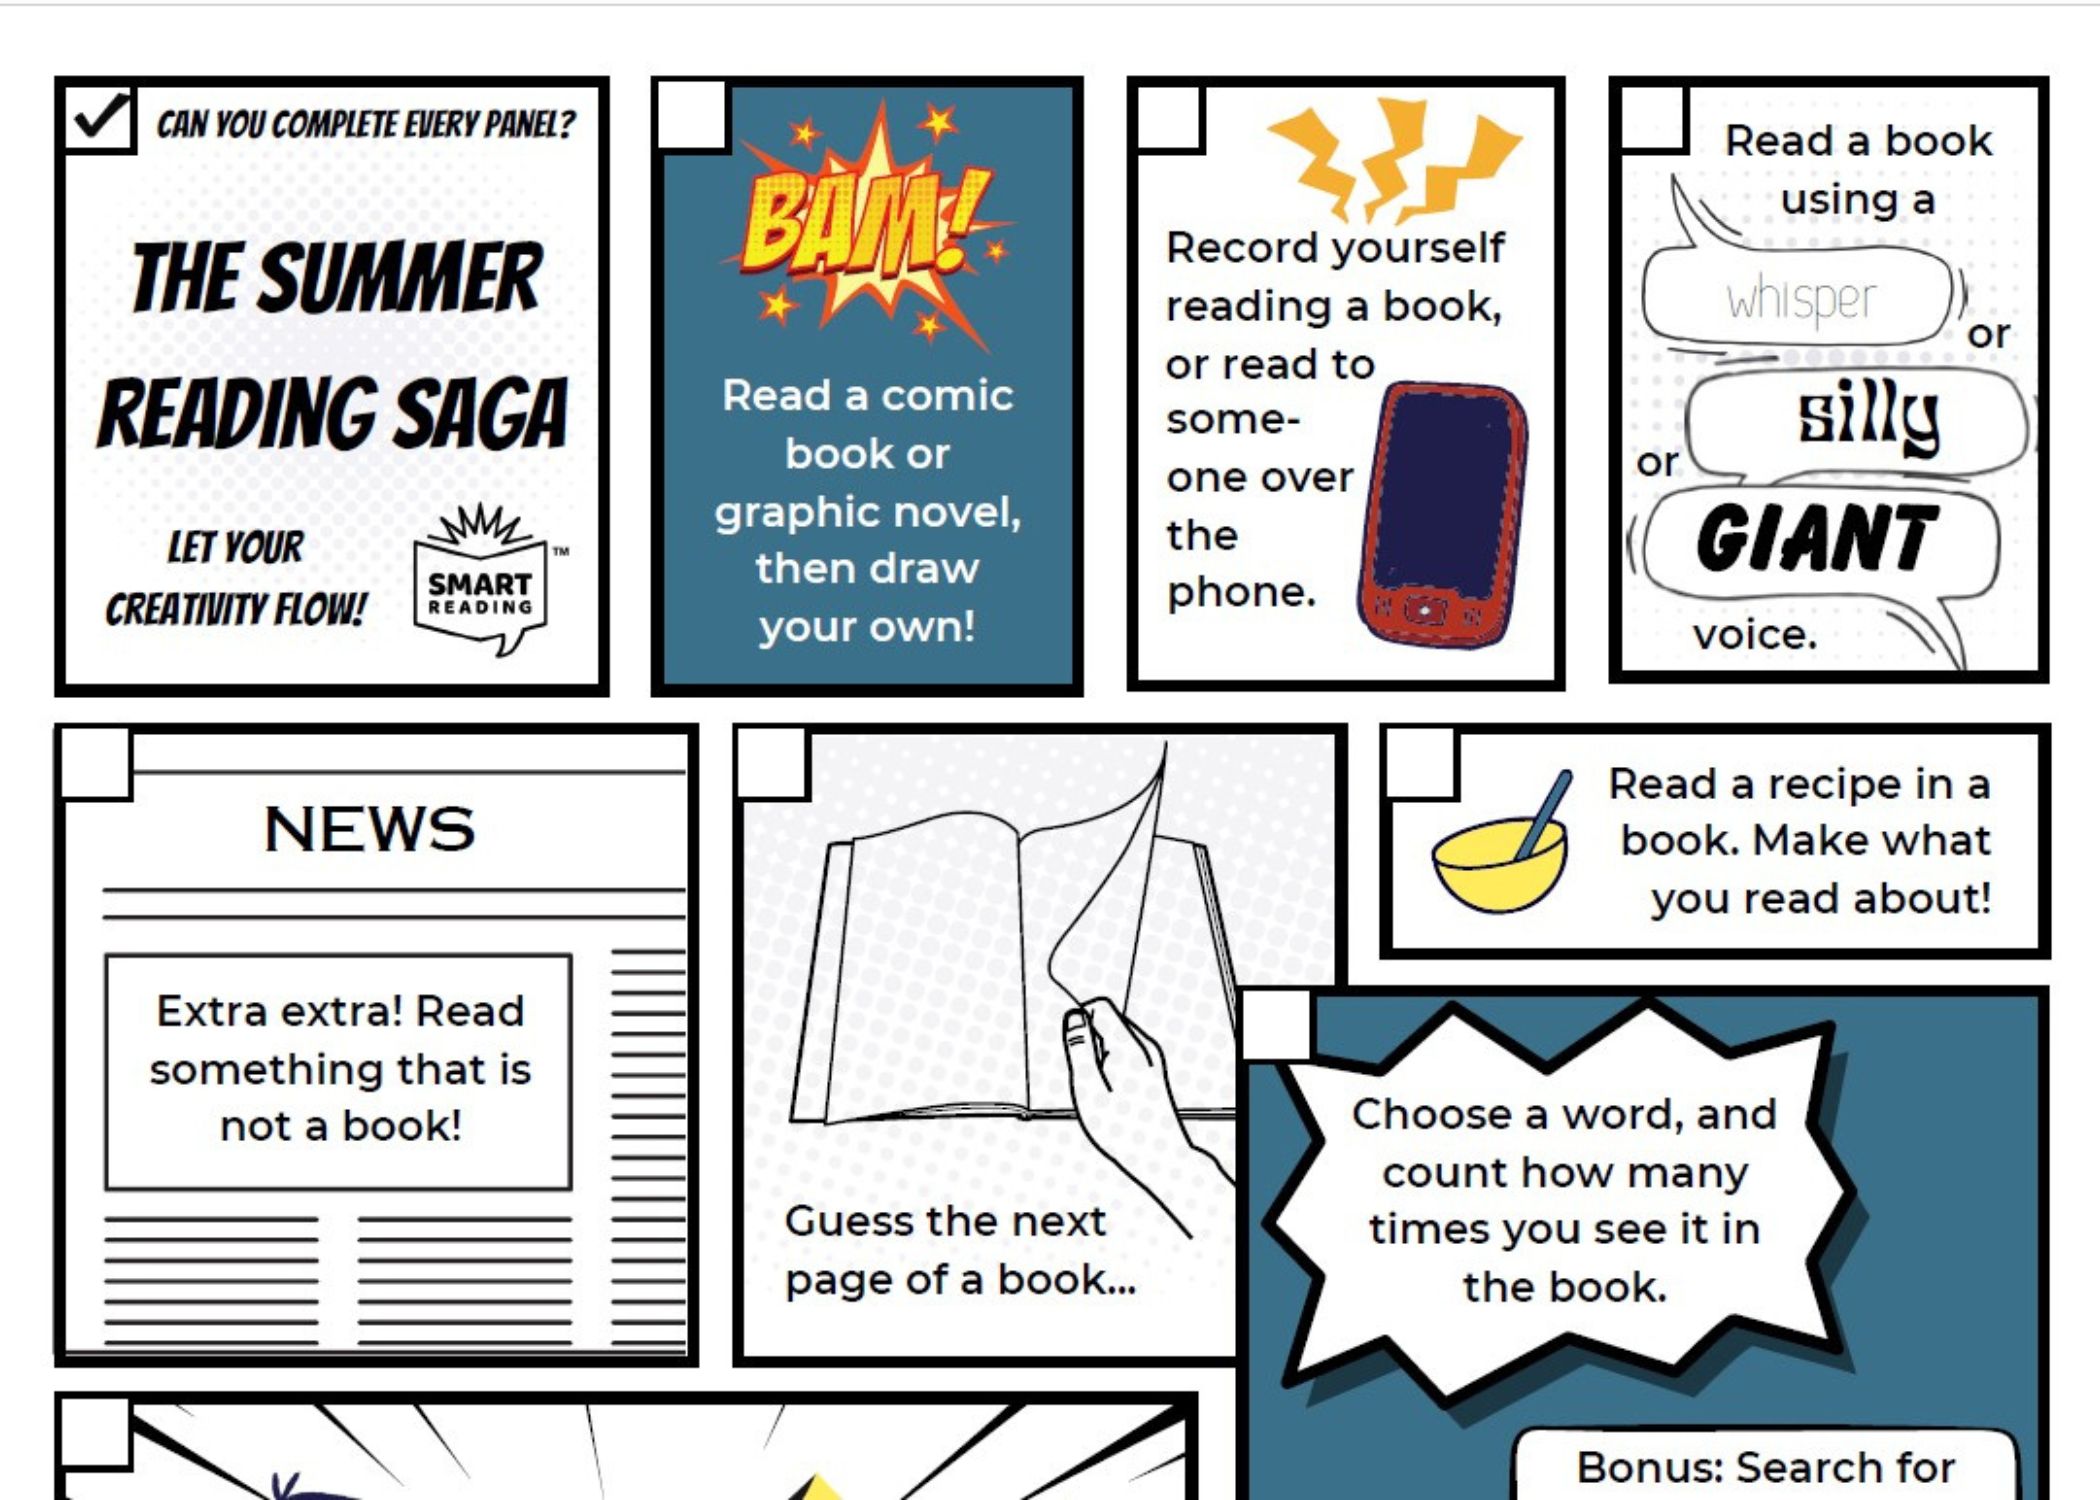 An image of the top half of the Summer Reading Saga activity sheet